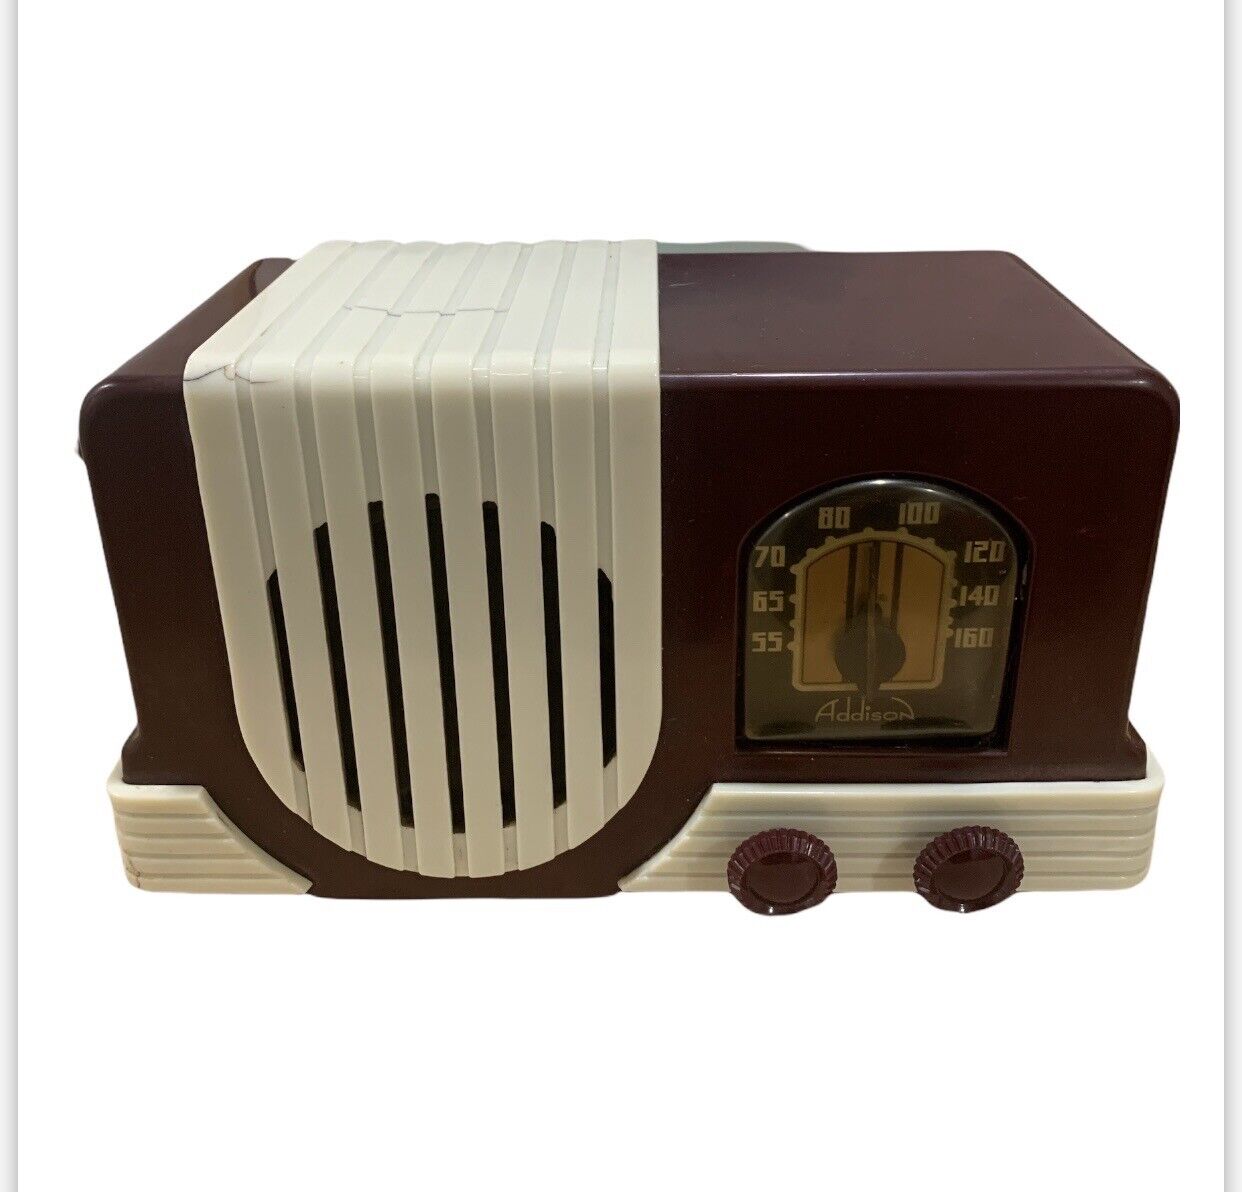 Addison Waterfall Radio Bakelite R5AI Antique 1940s Model 19 Red And White RARE